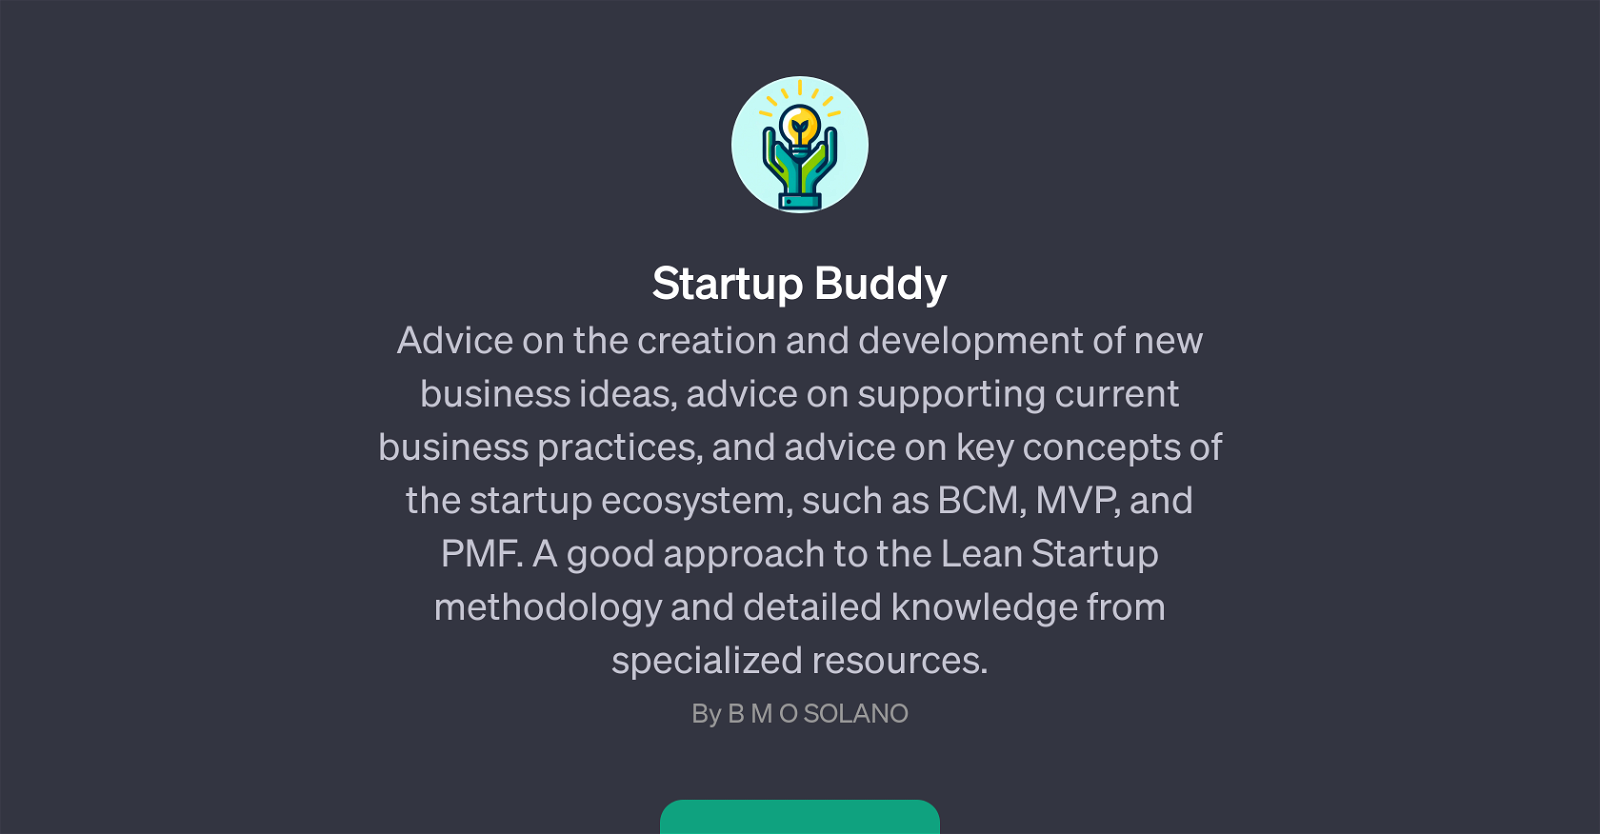 Startup Buddy website